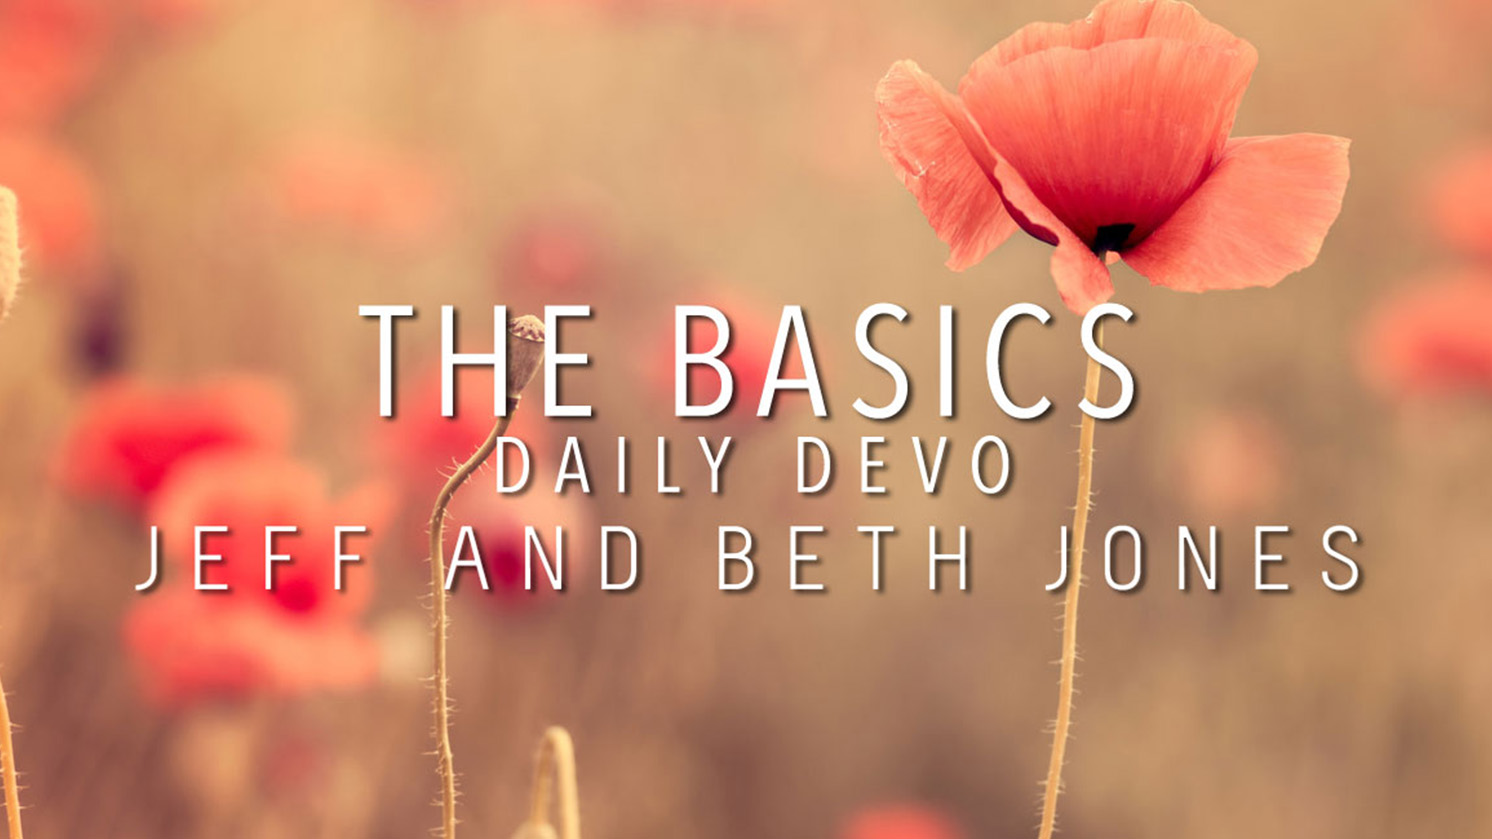 The Basics with Beth